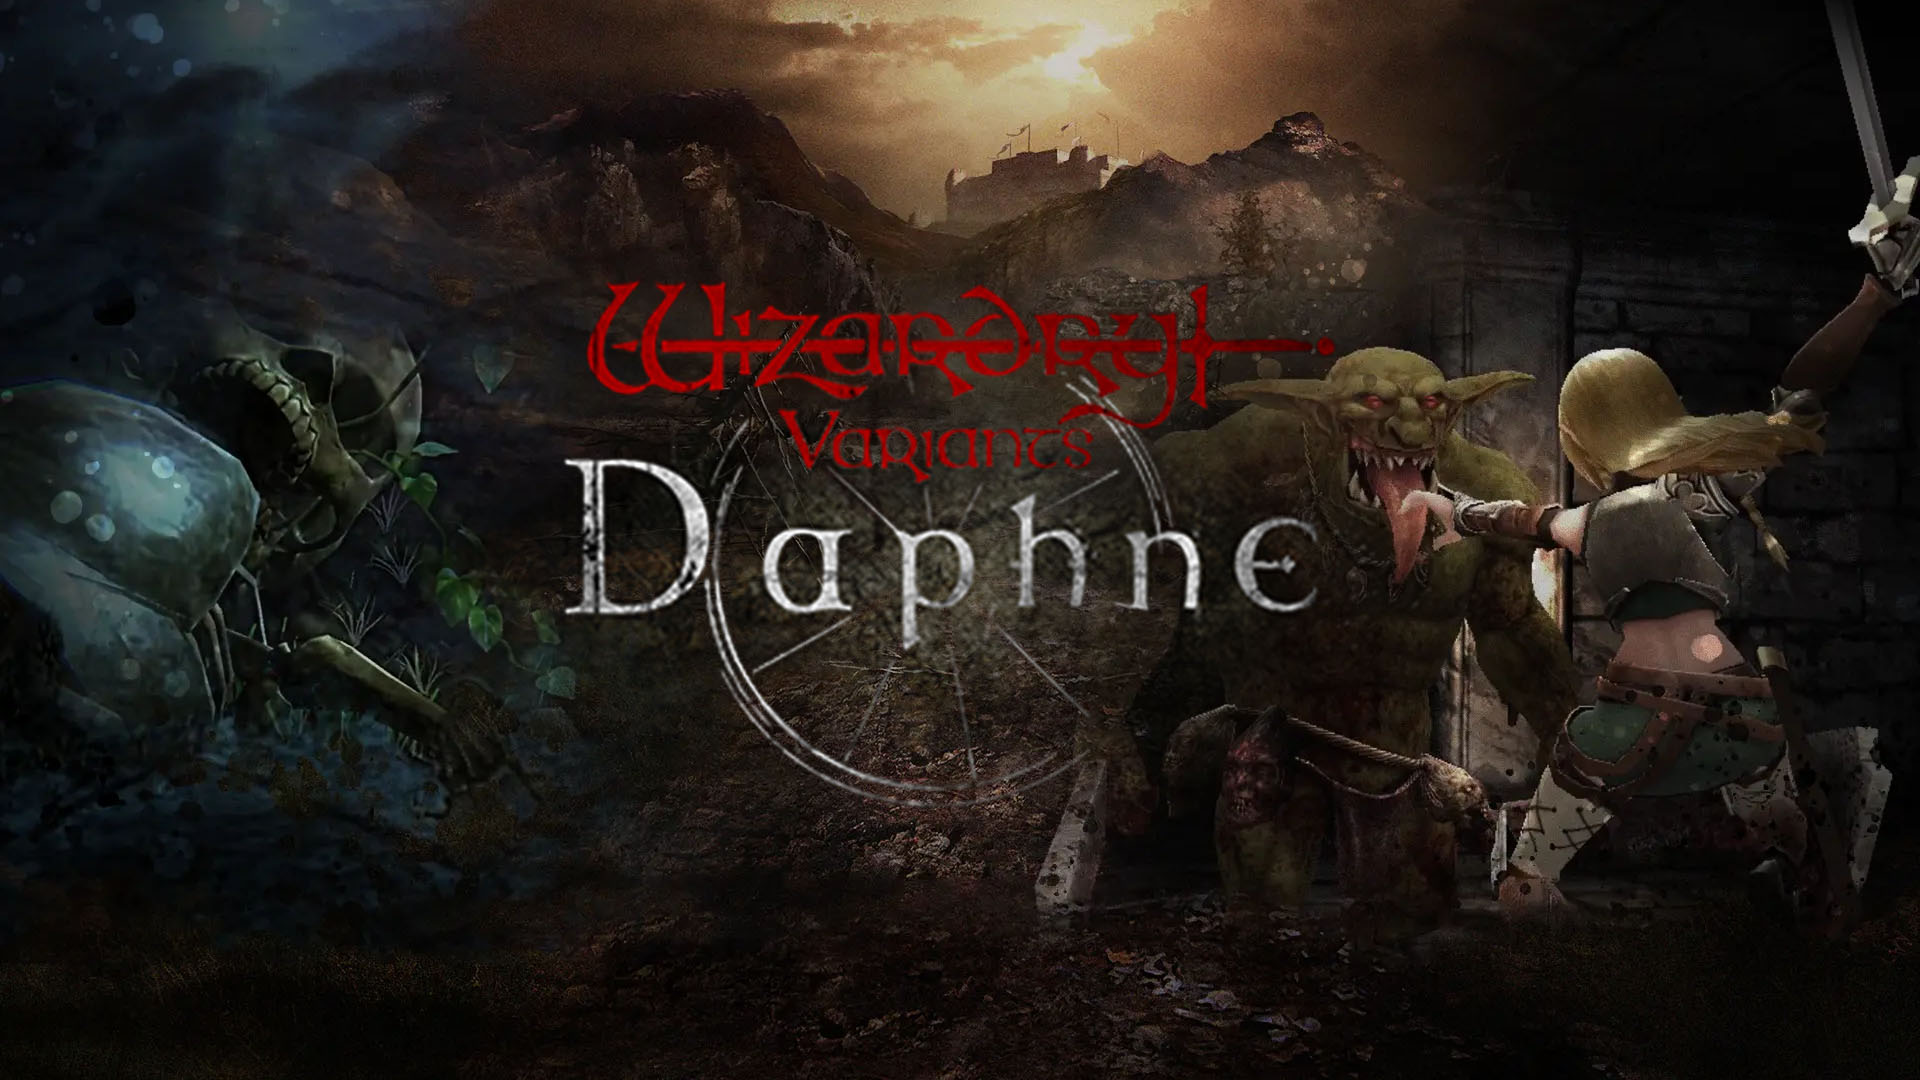 Wizardry Variants Daphne